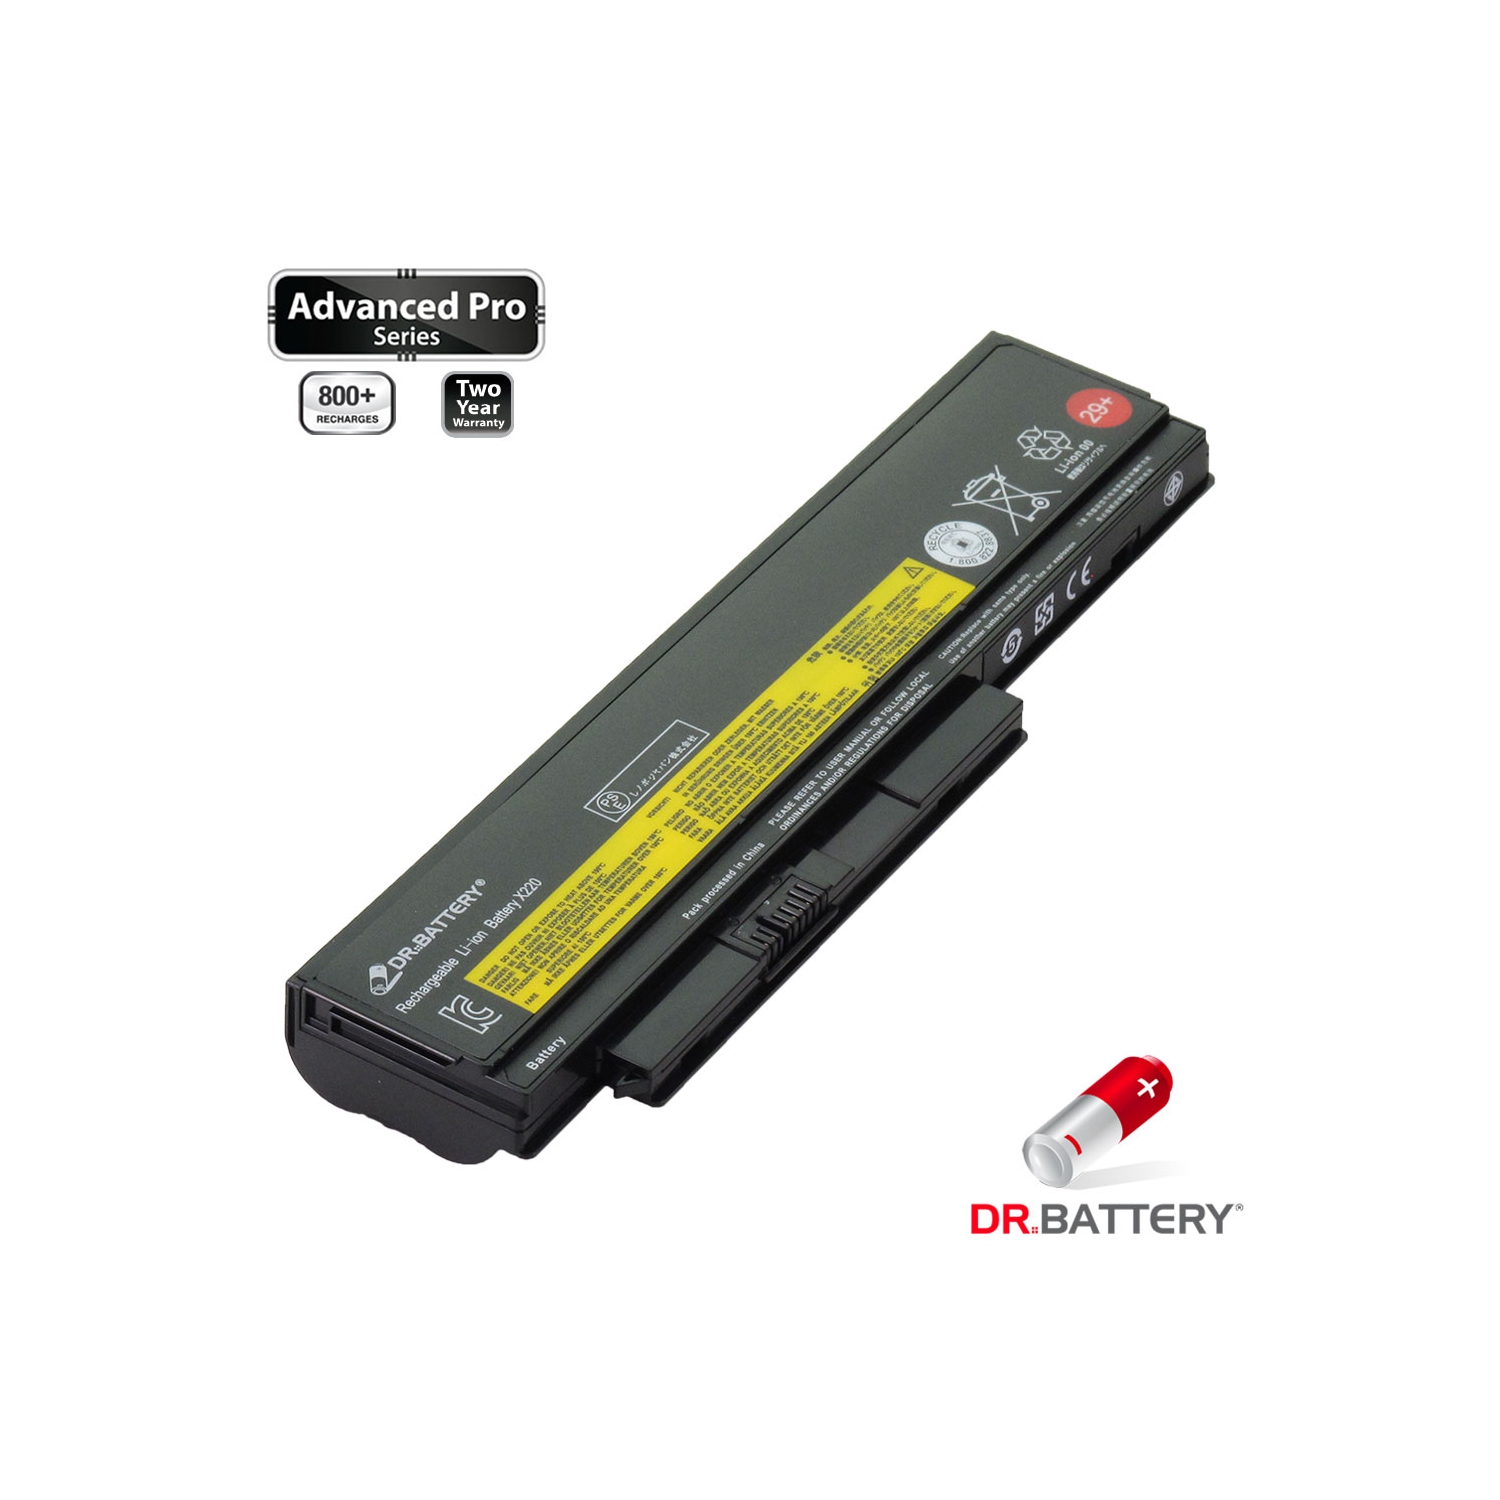 Dr. Battery - Samsung SDI Cells for Lenovo ThinkPad X220 4293 / X220 Series / 0A36282 / 0A36283 / 0A36305 - Free Shipping